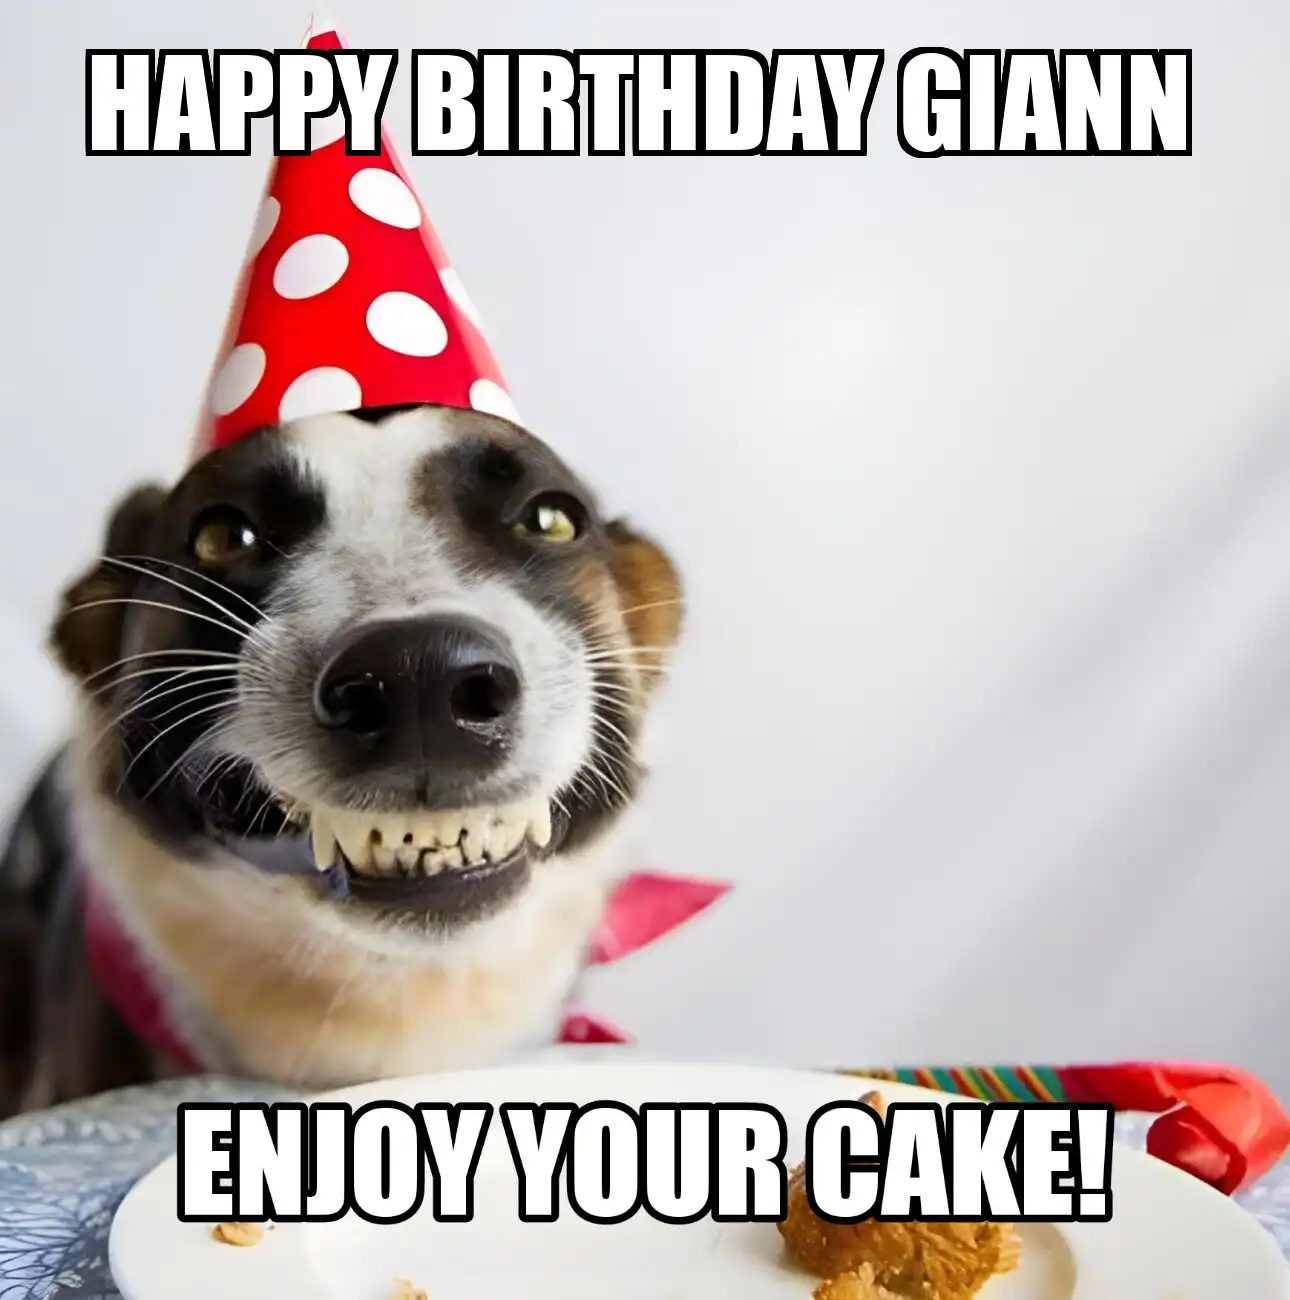 Happy Birthday Giann Enjoy Your Cake Dog Meme